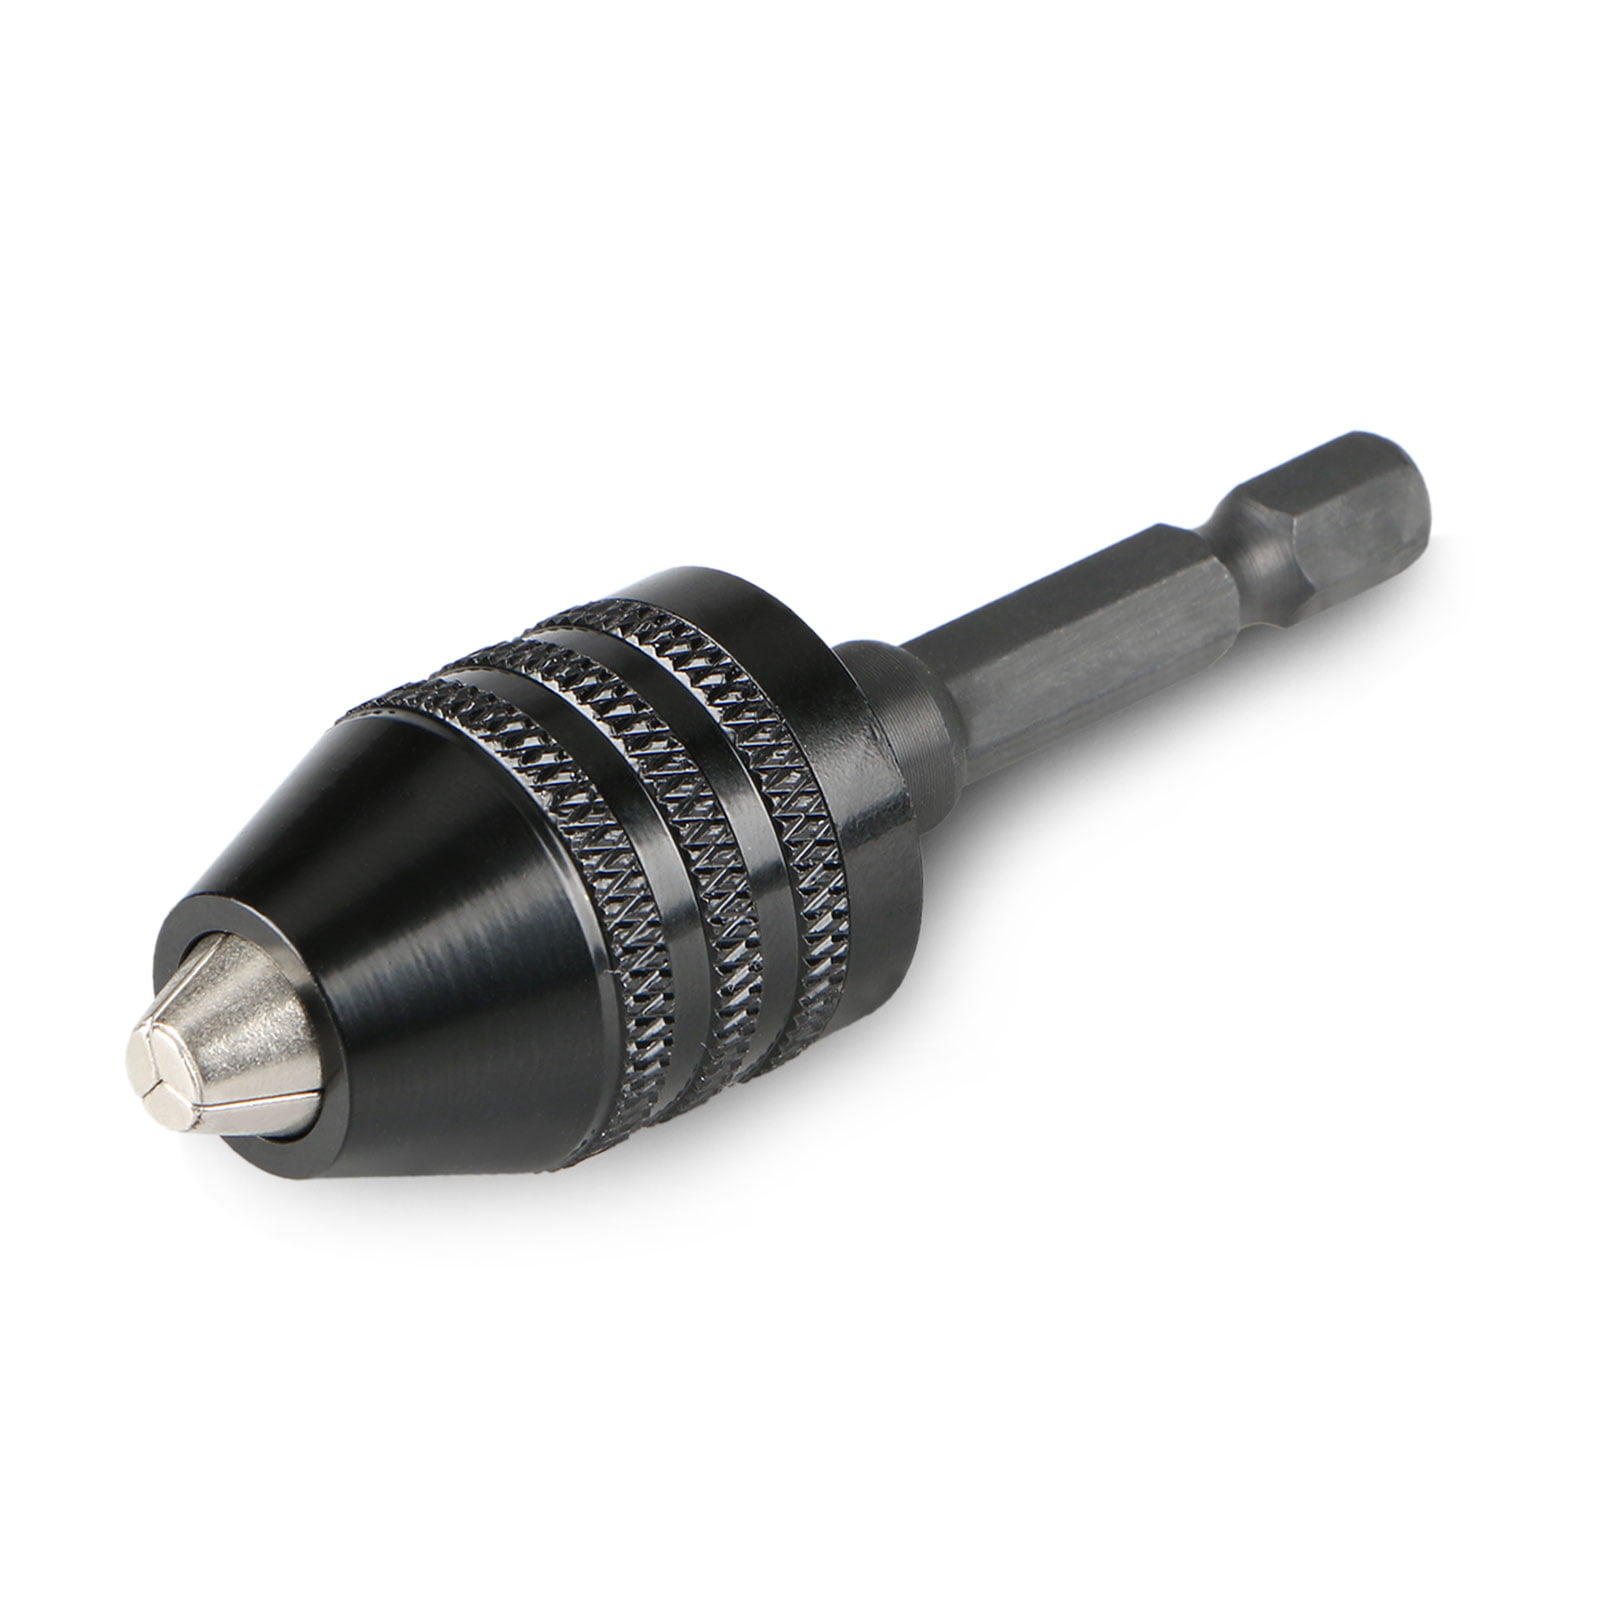 Keyless Aluminum Alloy Black Mini Jaw Drill Chuck Screwdriver Adapter With Quick Change